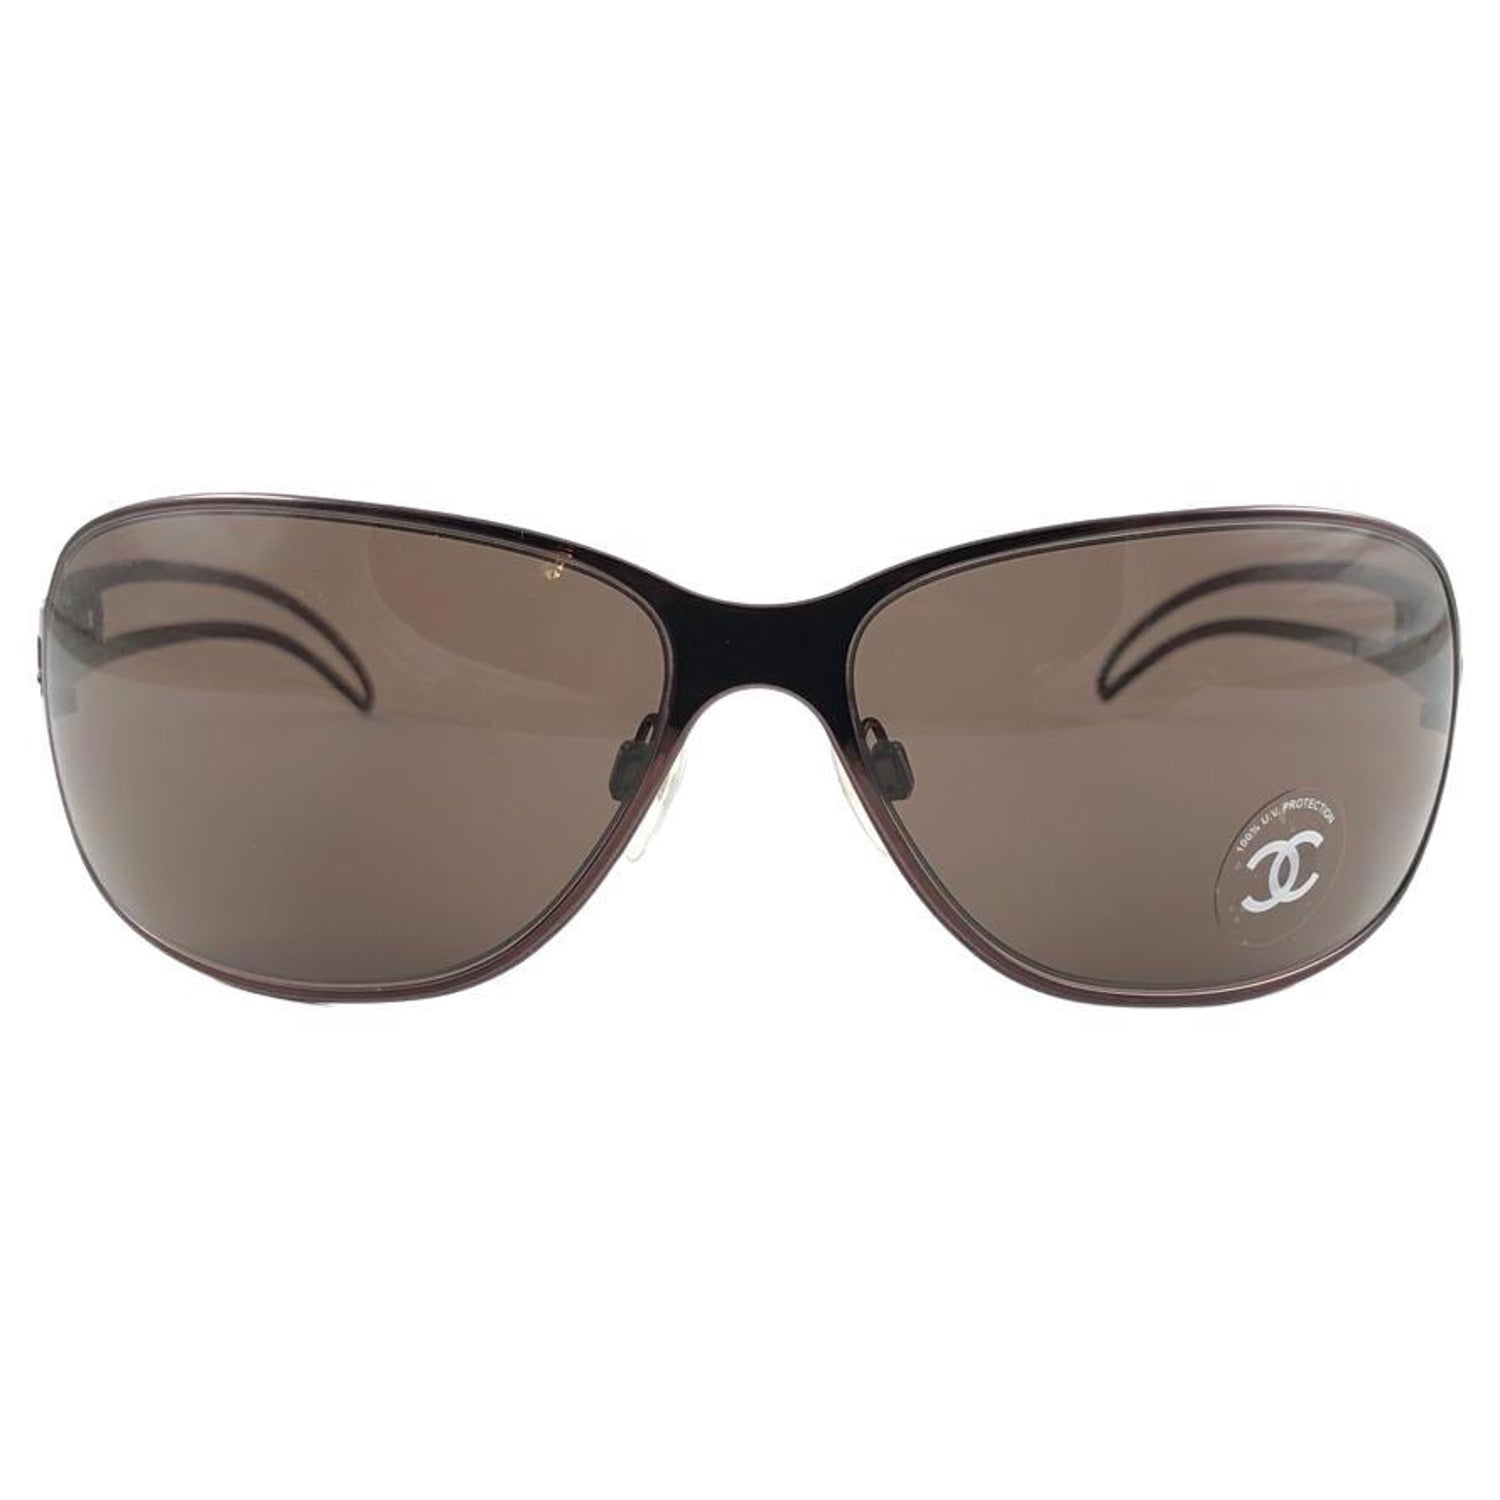 Vintage CHANEL Sunglasses 4023 Silver Blue Eyeglasses Frames 4024 Very RARE  for sale online